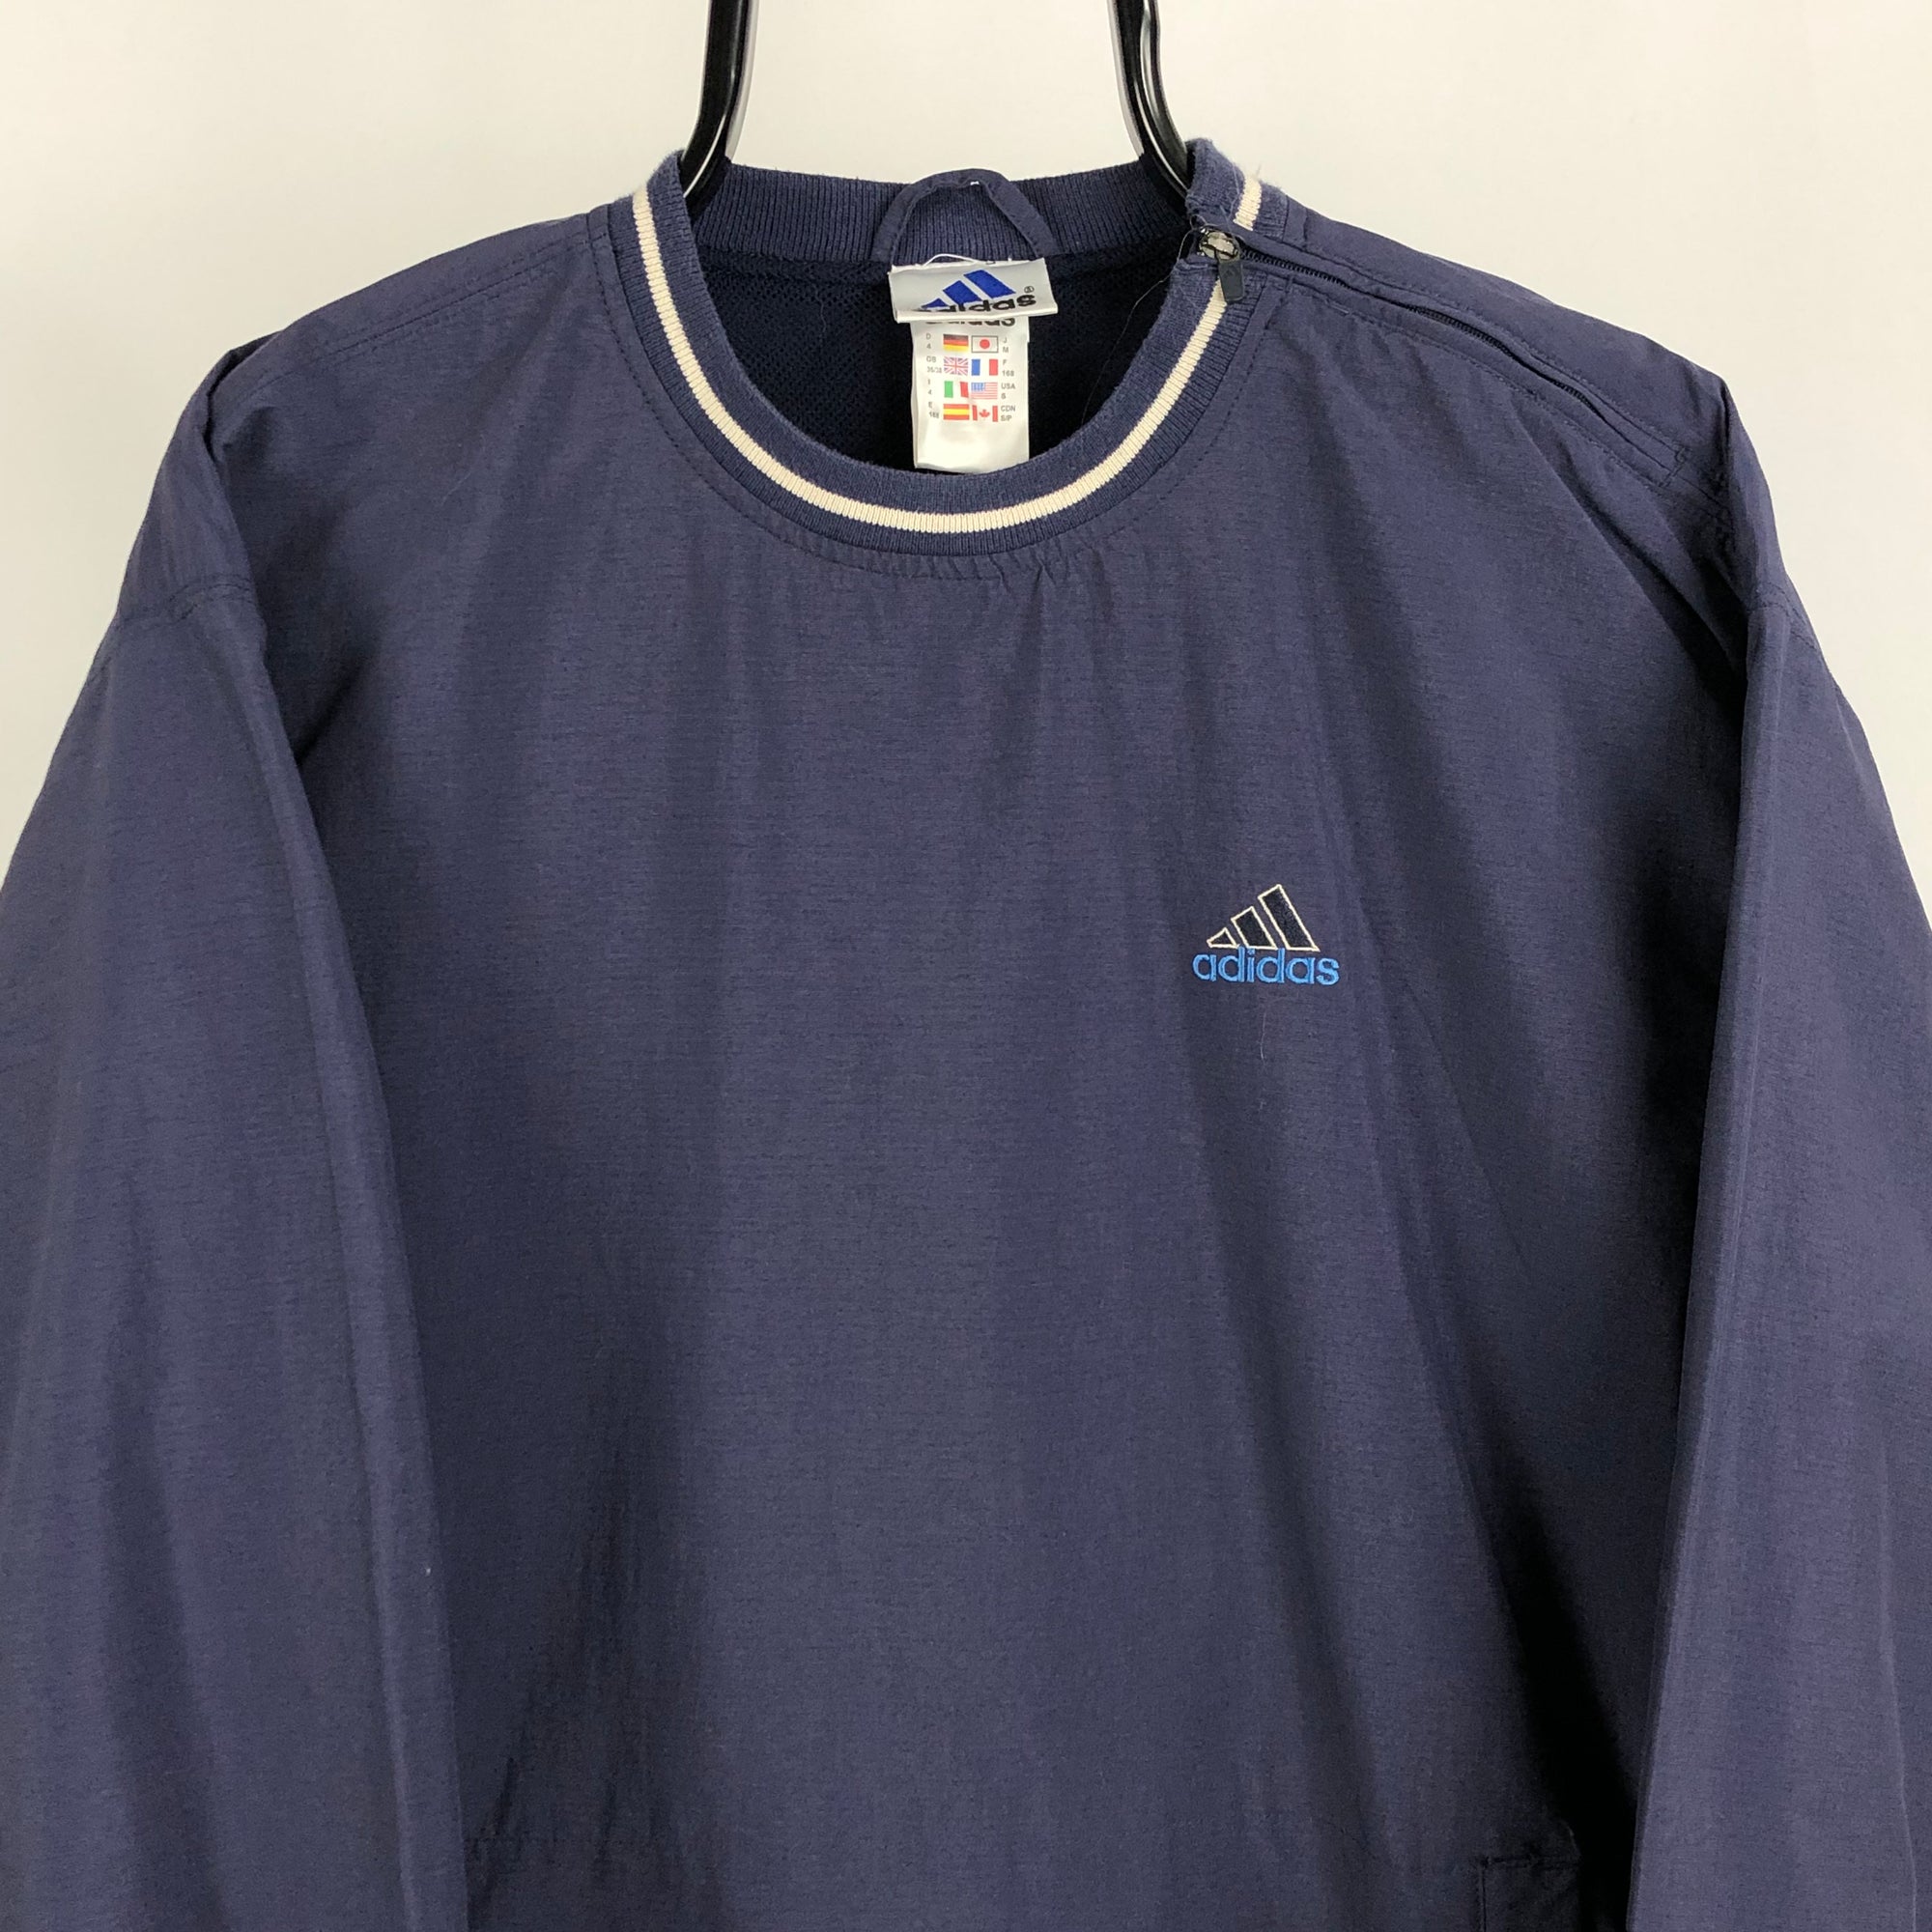 Vintage Adidas Nylon Sweatshirt/Training Top - Men's Small/Women's Medium